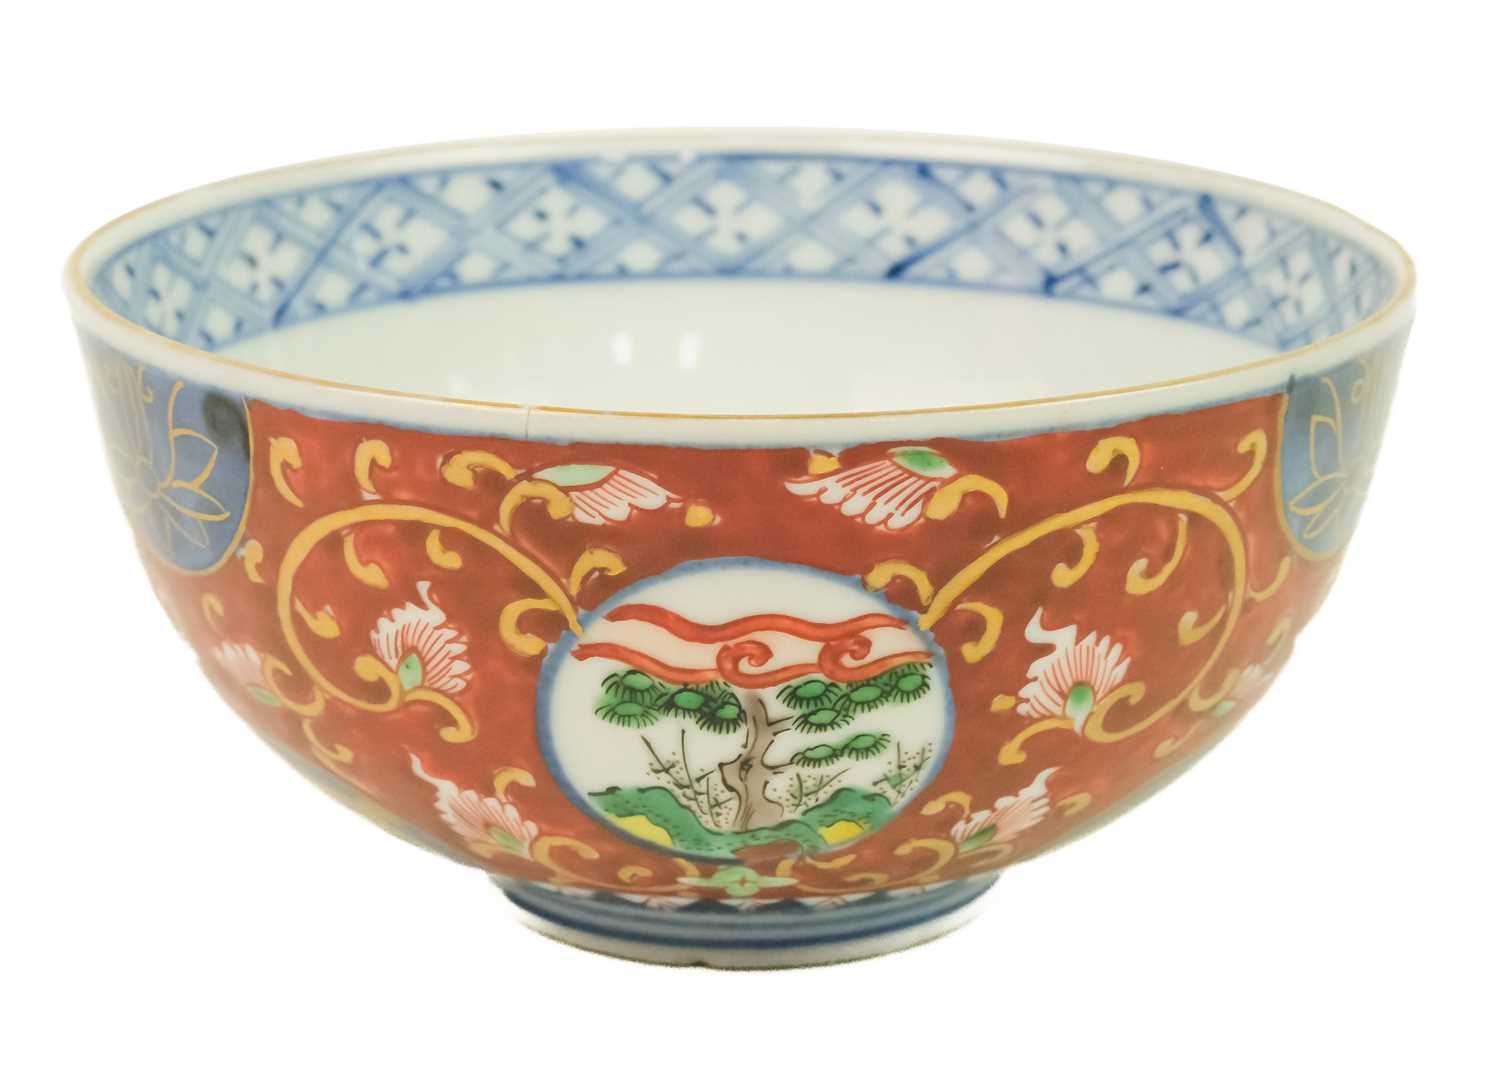 A Japanese porcelain bowl, late Meiji period.